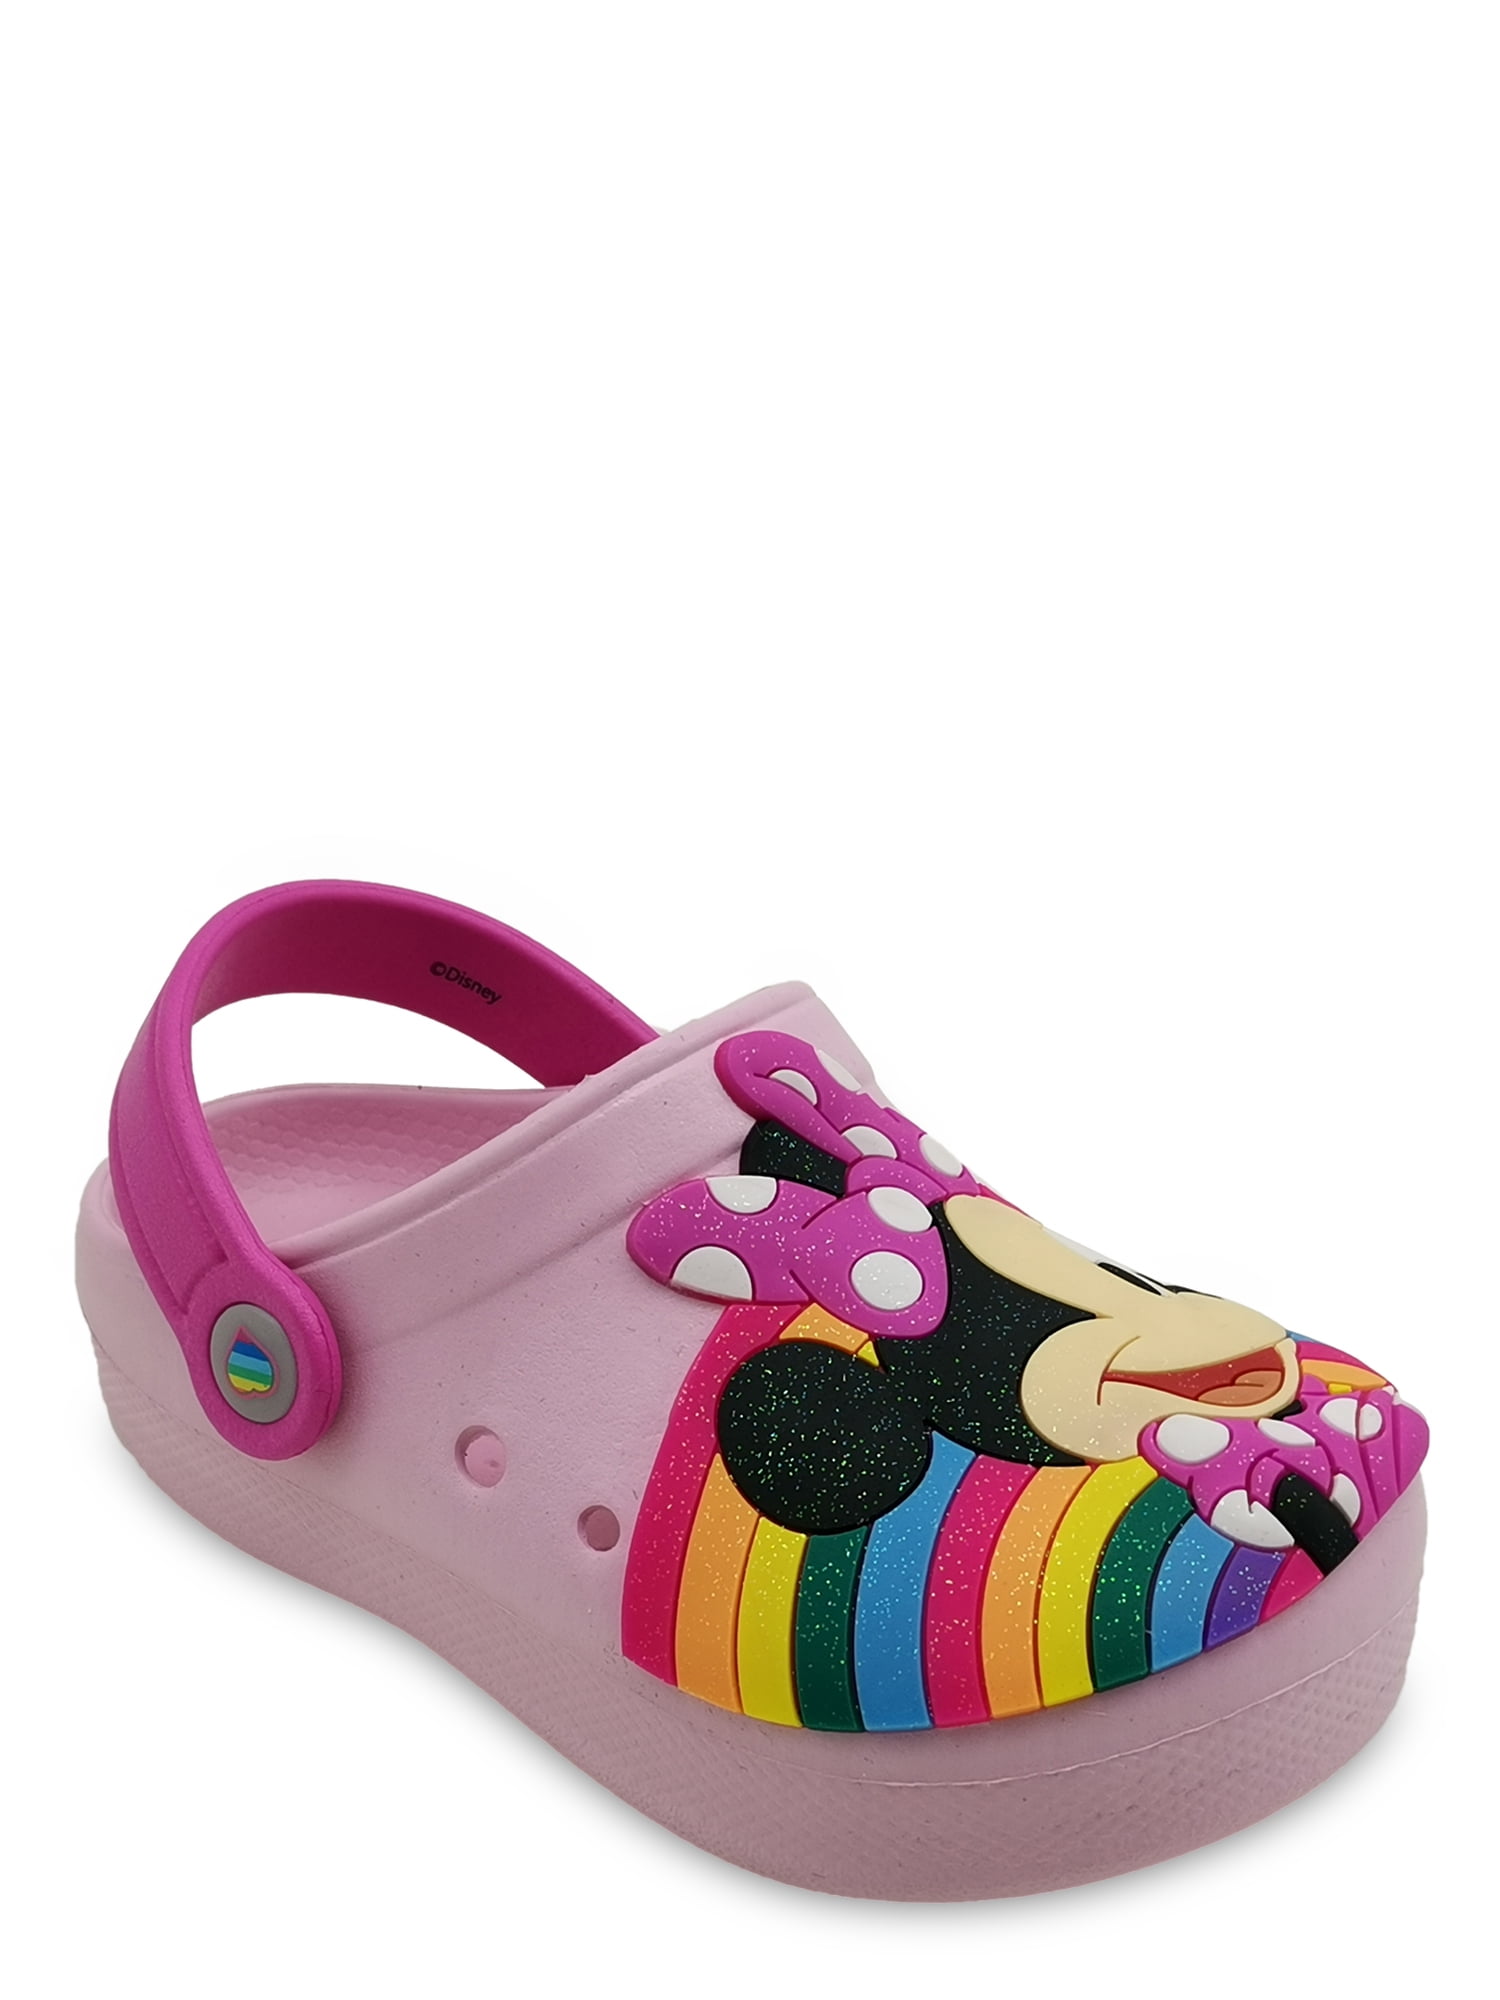 New  toddler girls black purple pink unicorn minnie  emoji clogs slippers shoes 